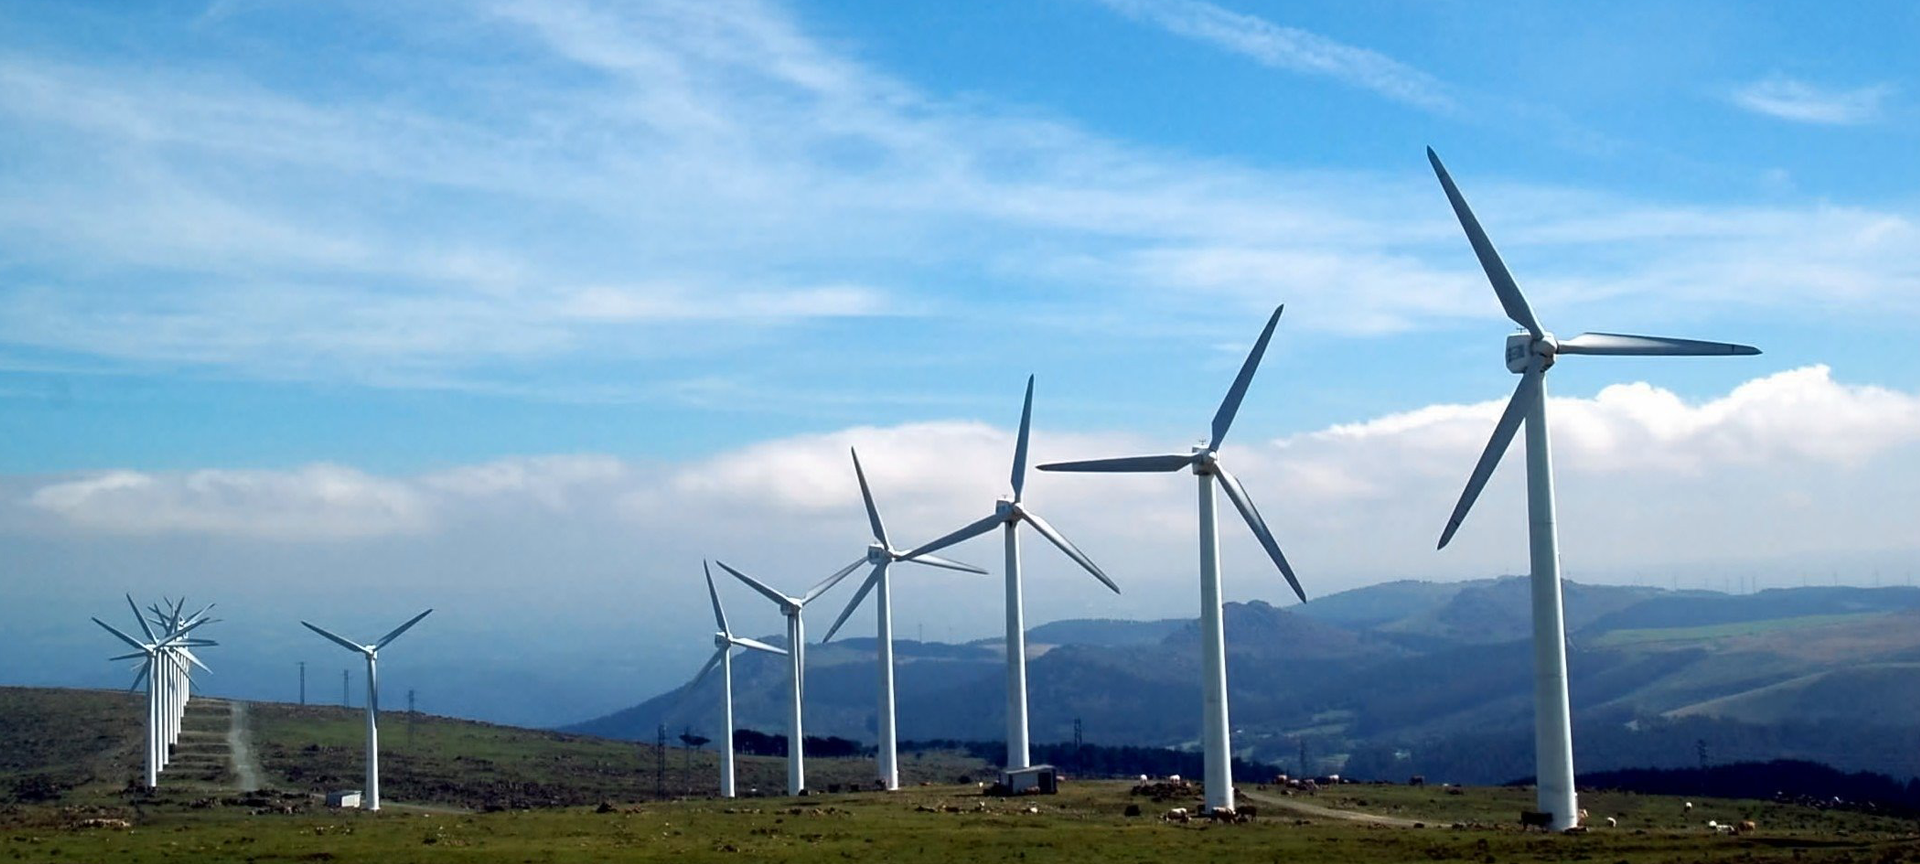 photograph of a windfarm